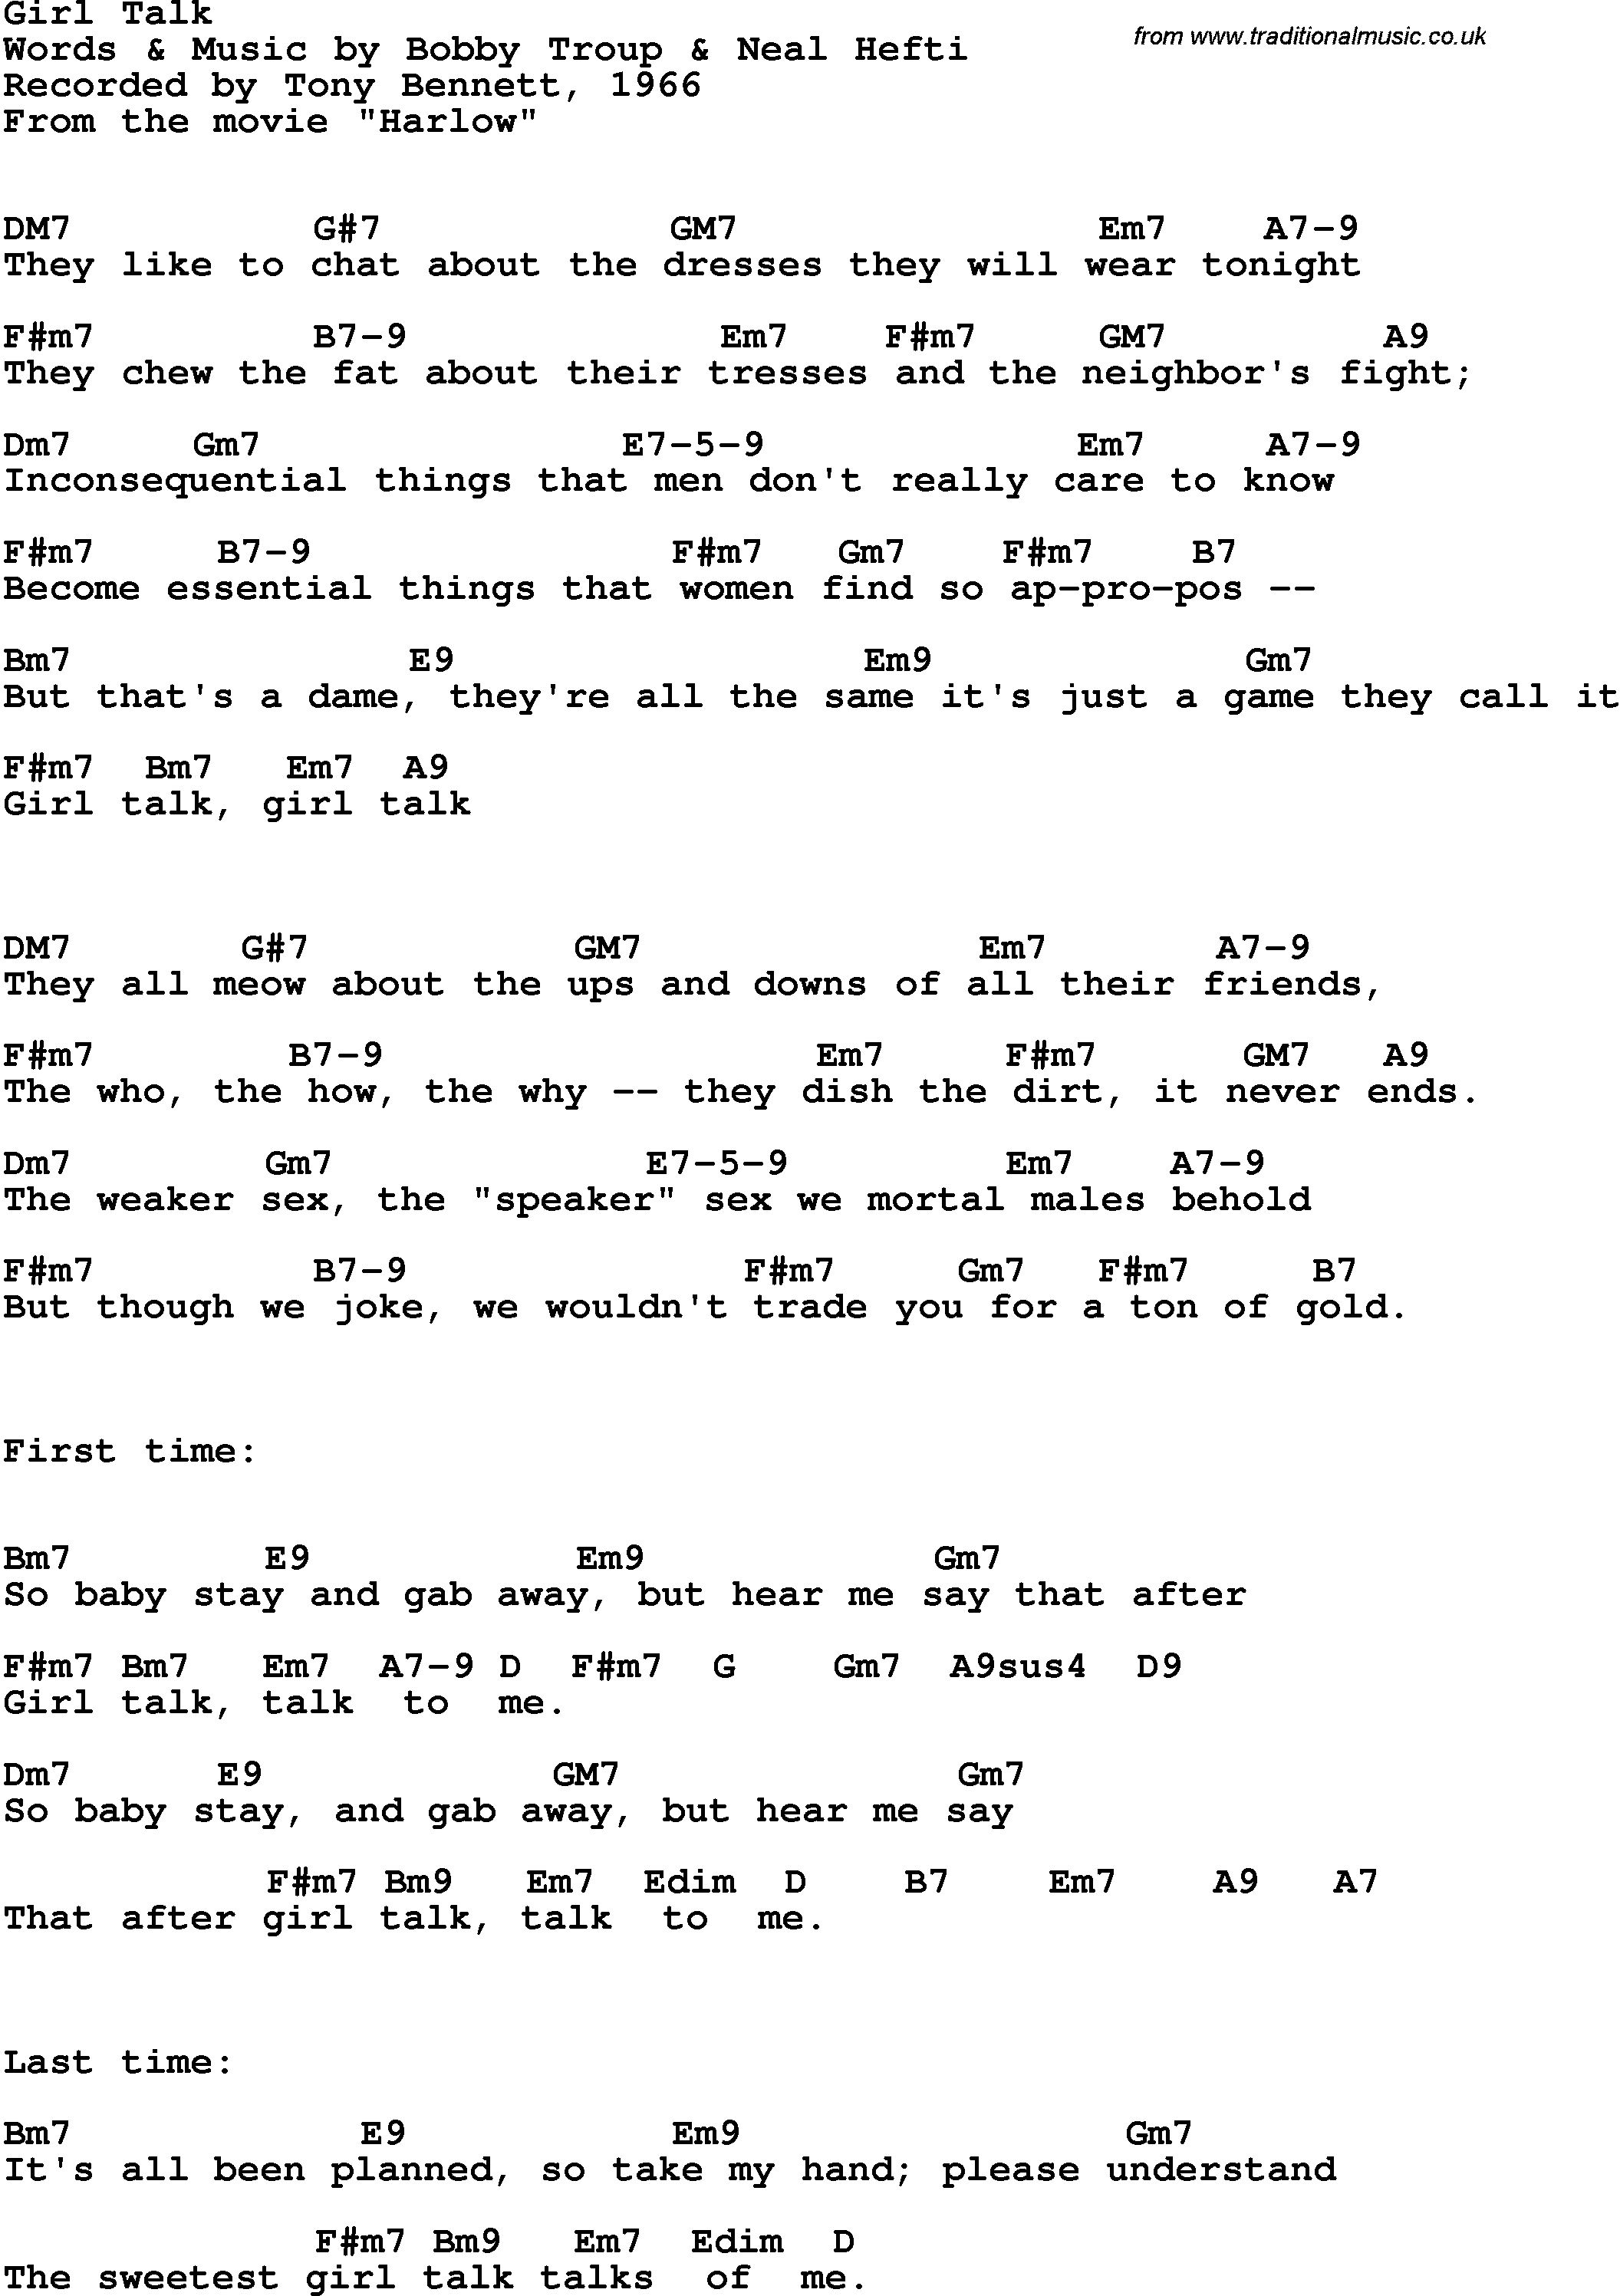 Song Lyrics with guitar chords for Girl Talk - Tony Bennett, 1966